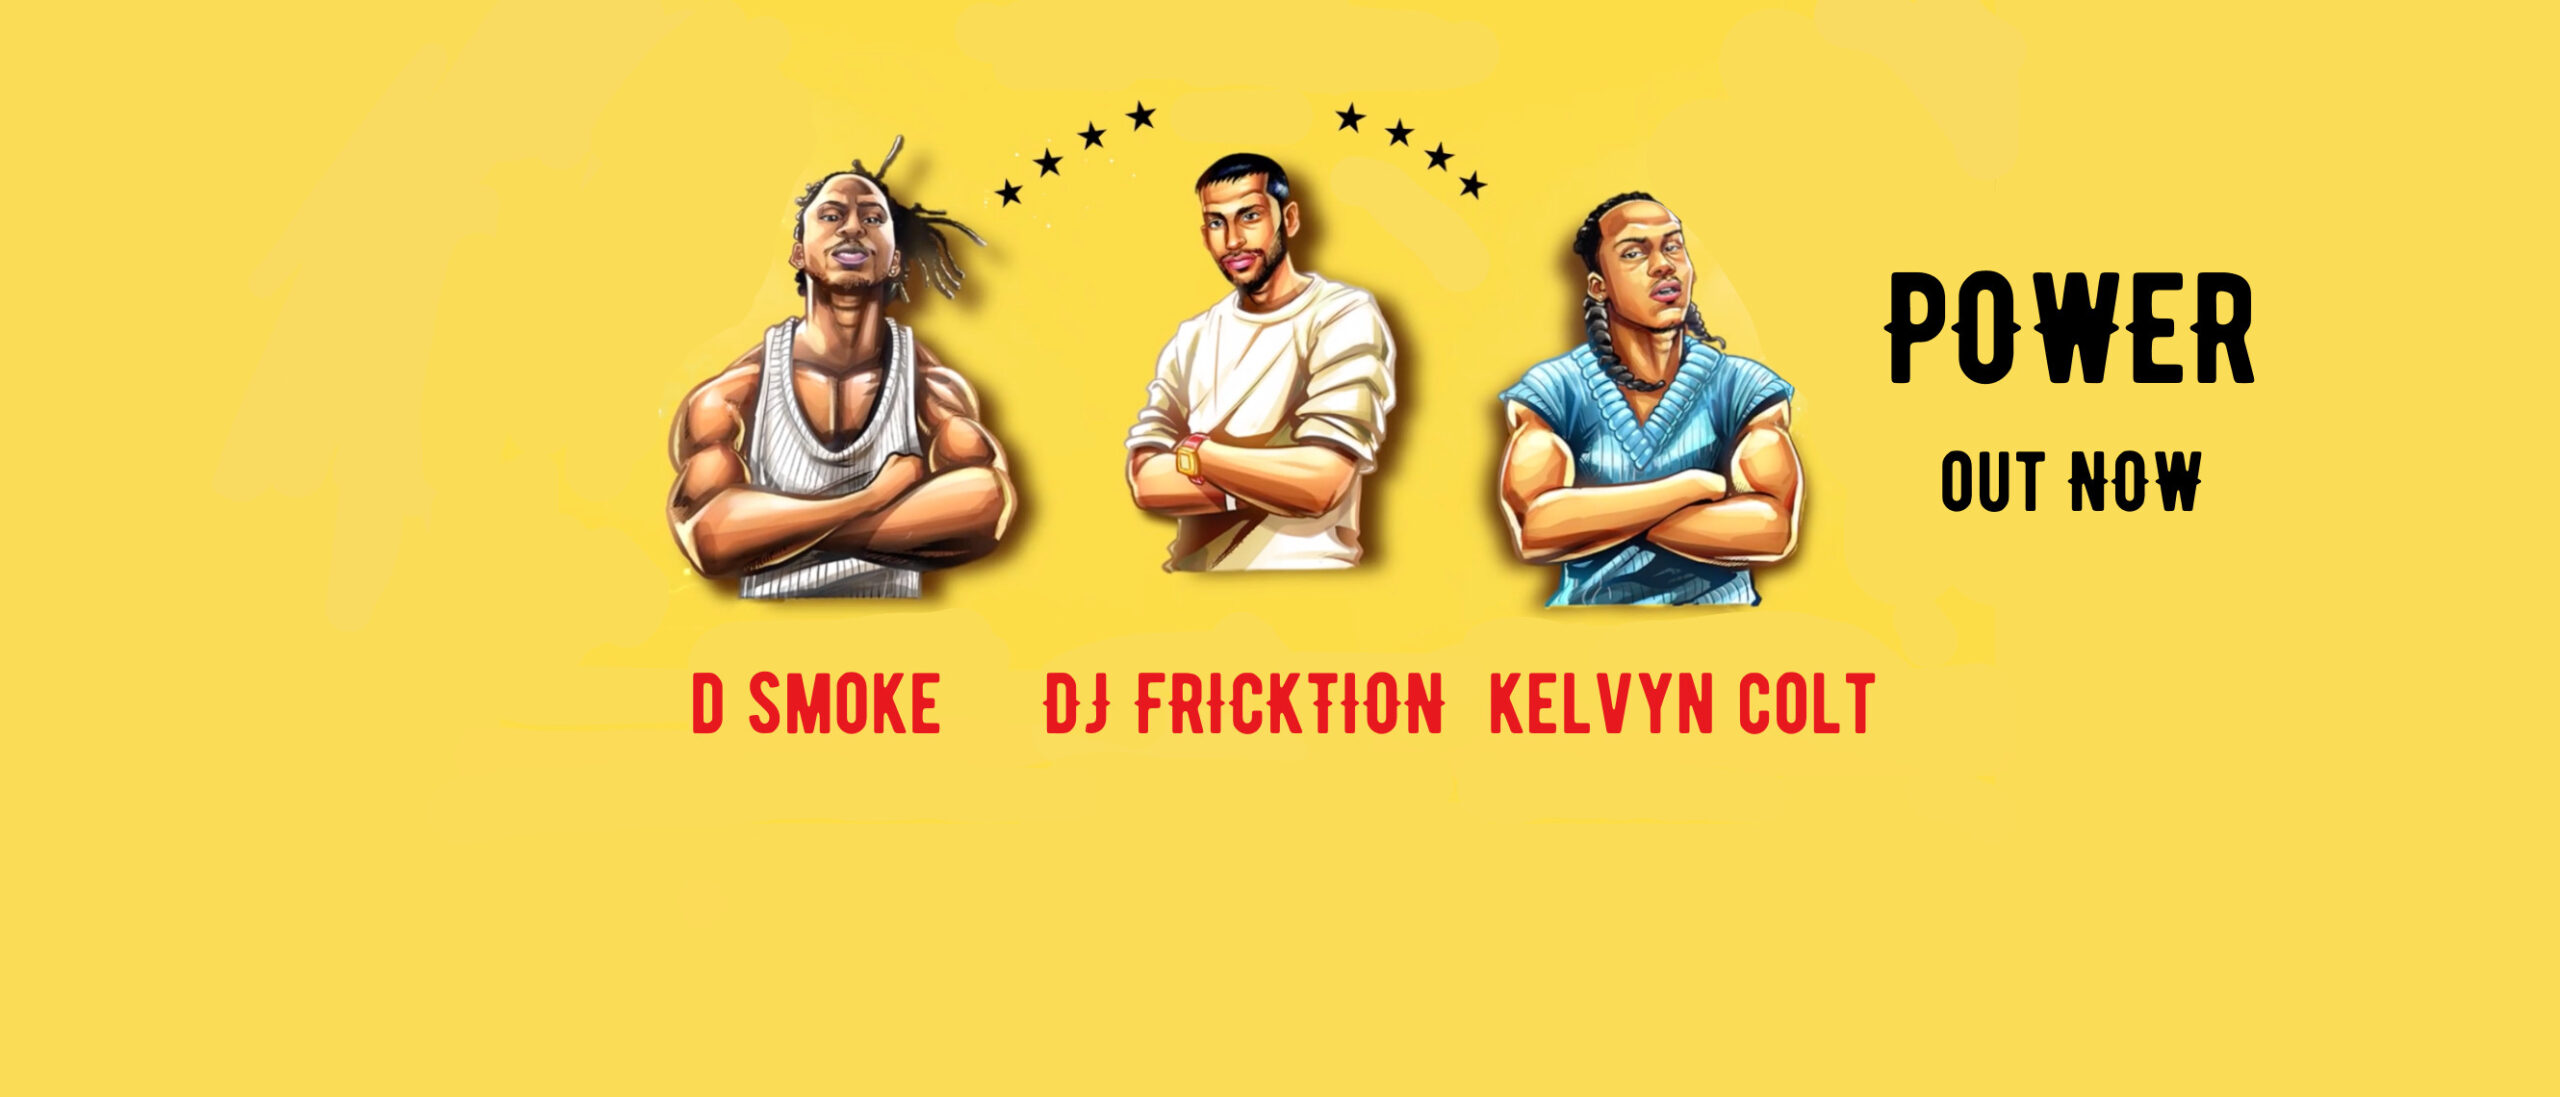 DJ Fricktion Drops Gritty, Motivational Anthem Power ft Kelvyn Colt and D Smoke